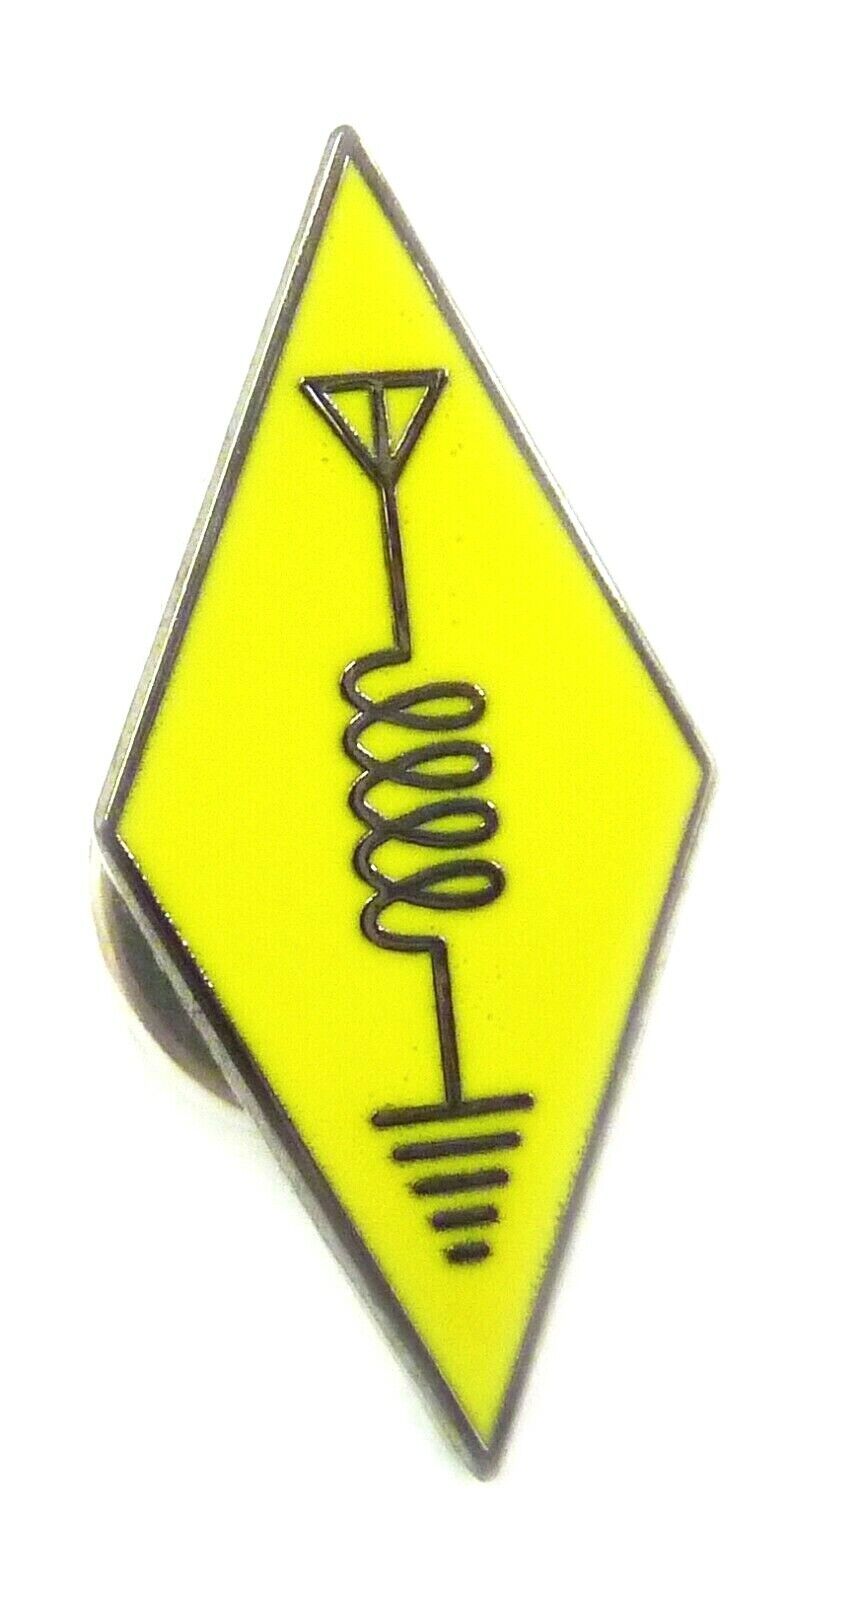 Ham Radio CB Frequency Symbol Emergency Hat Jacket Tie Tack Lapel Pin